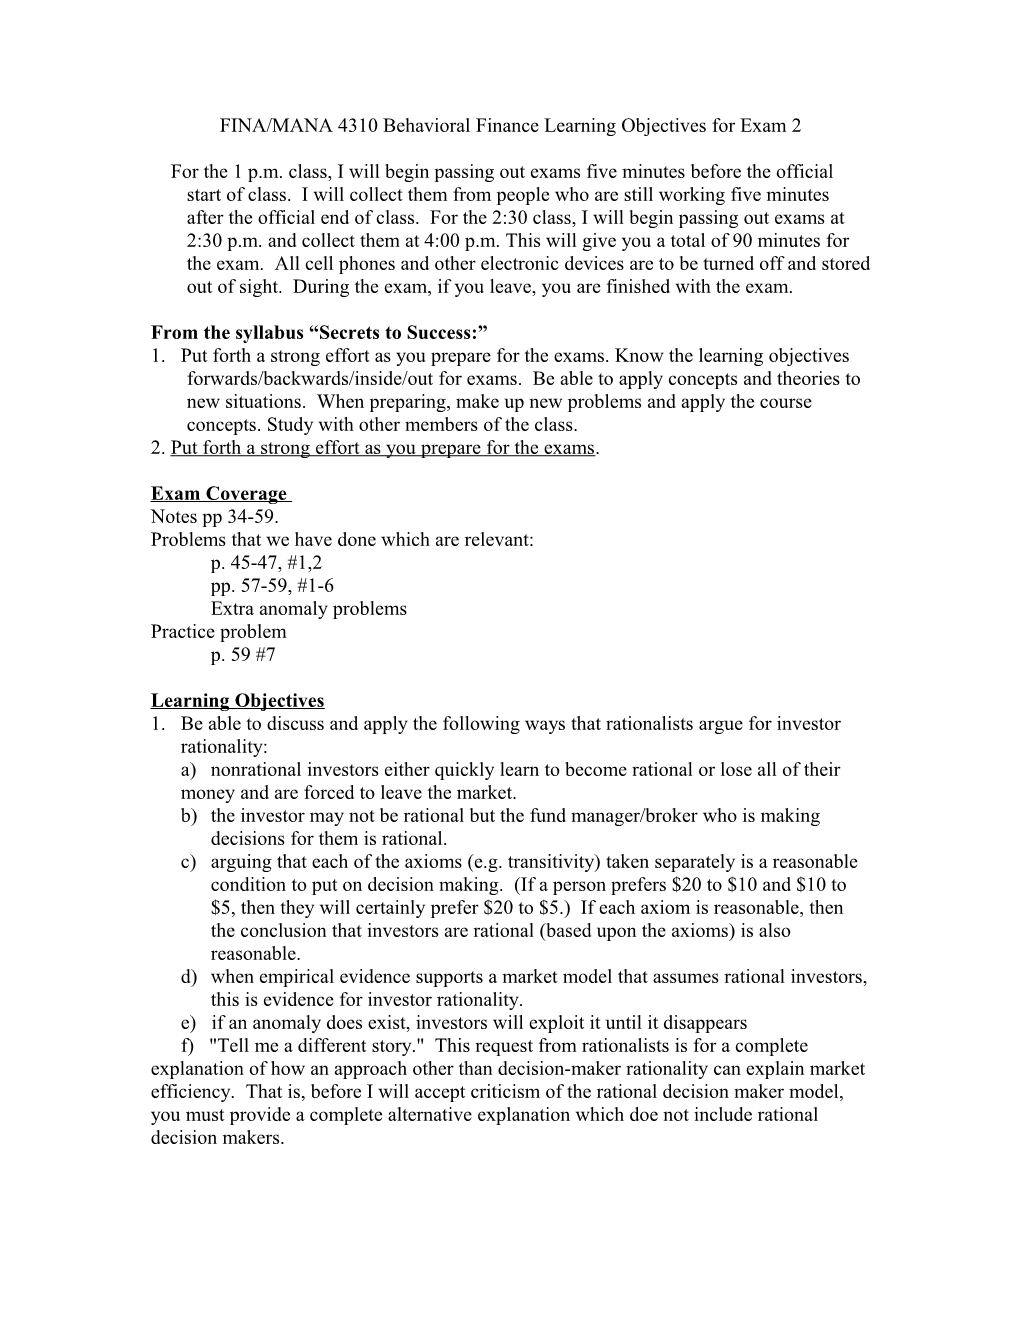 FINA/MANA 4397 Behavioral Finance Learning Objectives for Quiz 1